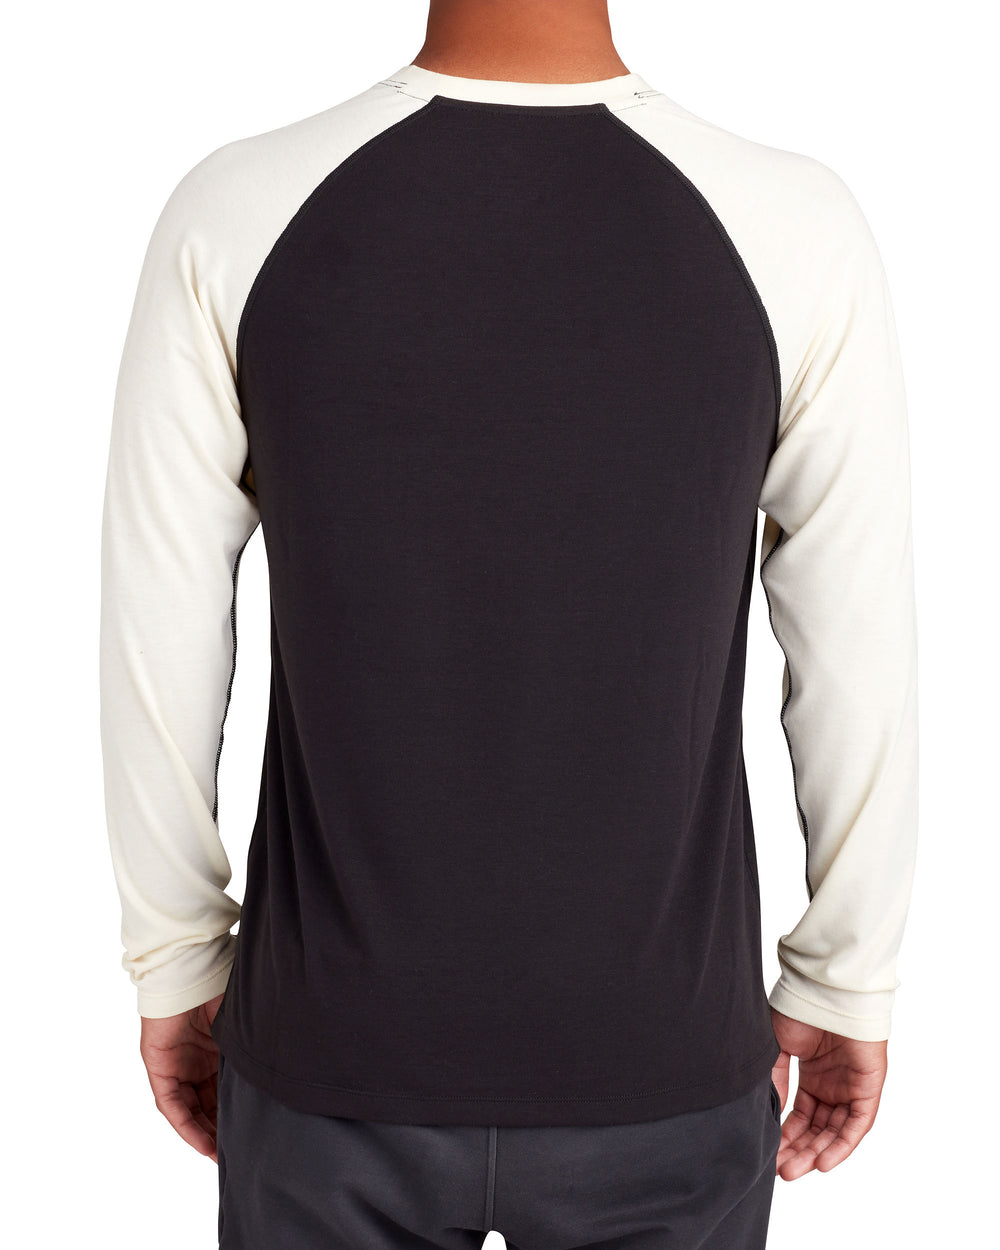 Long-Sleeved Raglan UPF 50+ T-Shirt - Black/White